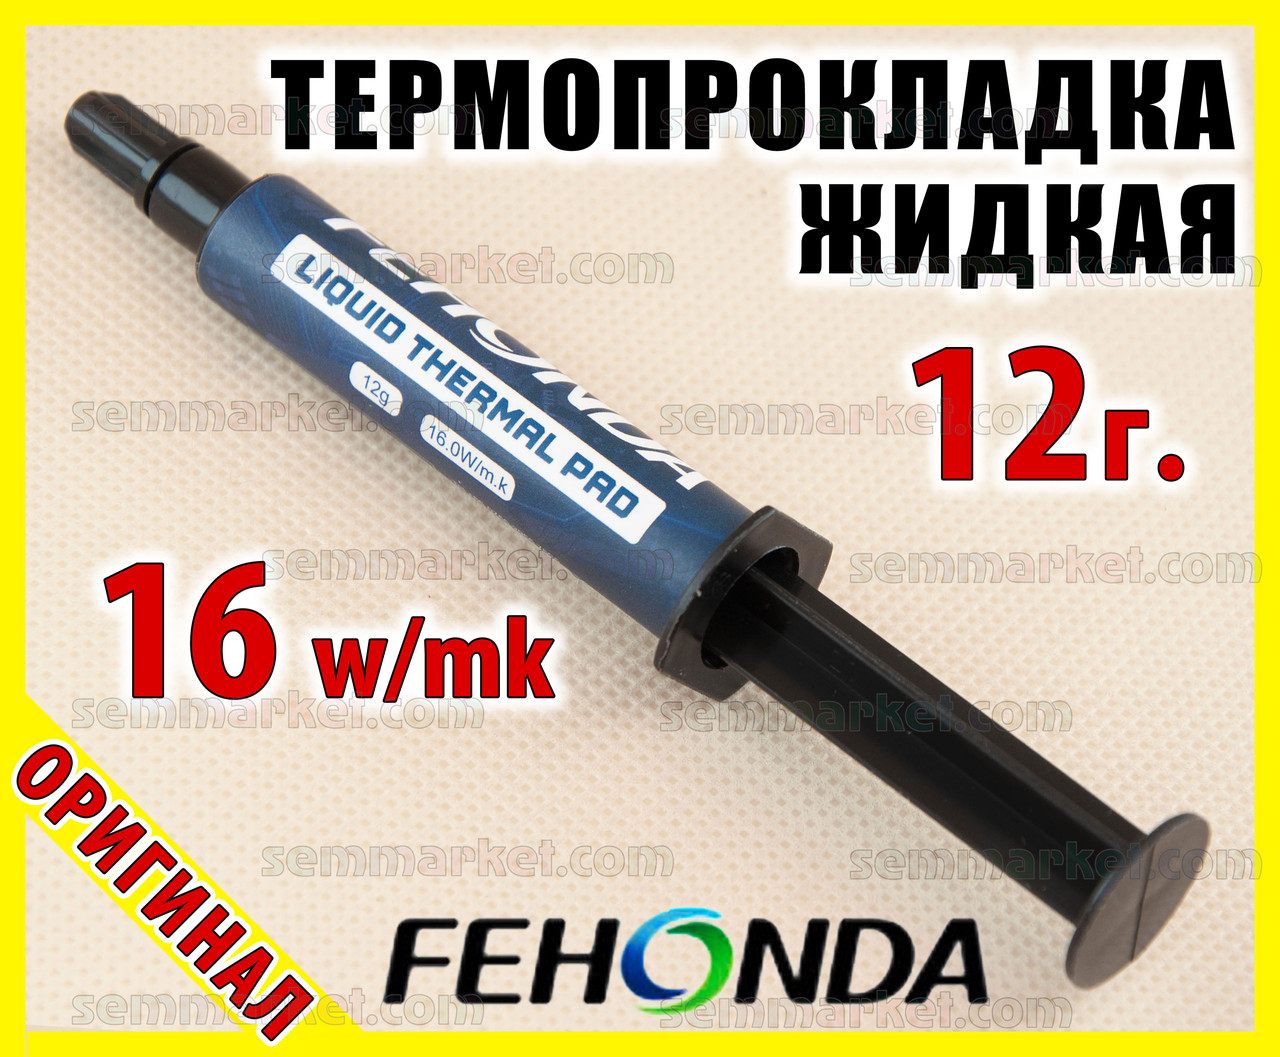 Термопрокладка рідка FEHONDA TF6001 16W/mk 12 г термоінтерфейс термогель терможвачка